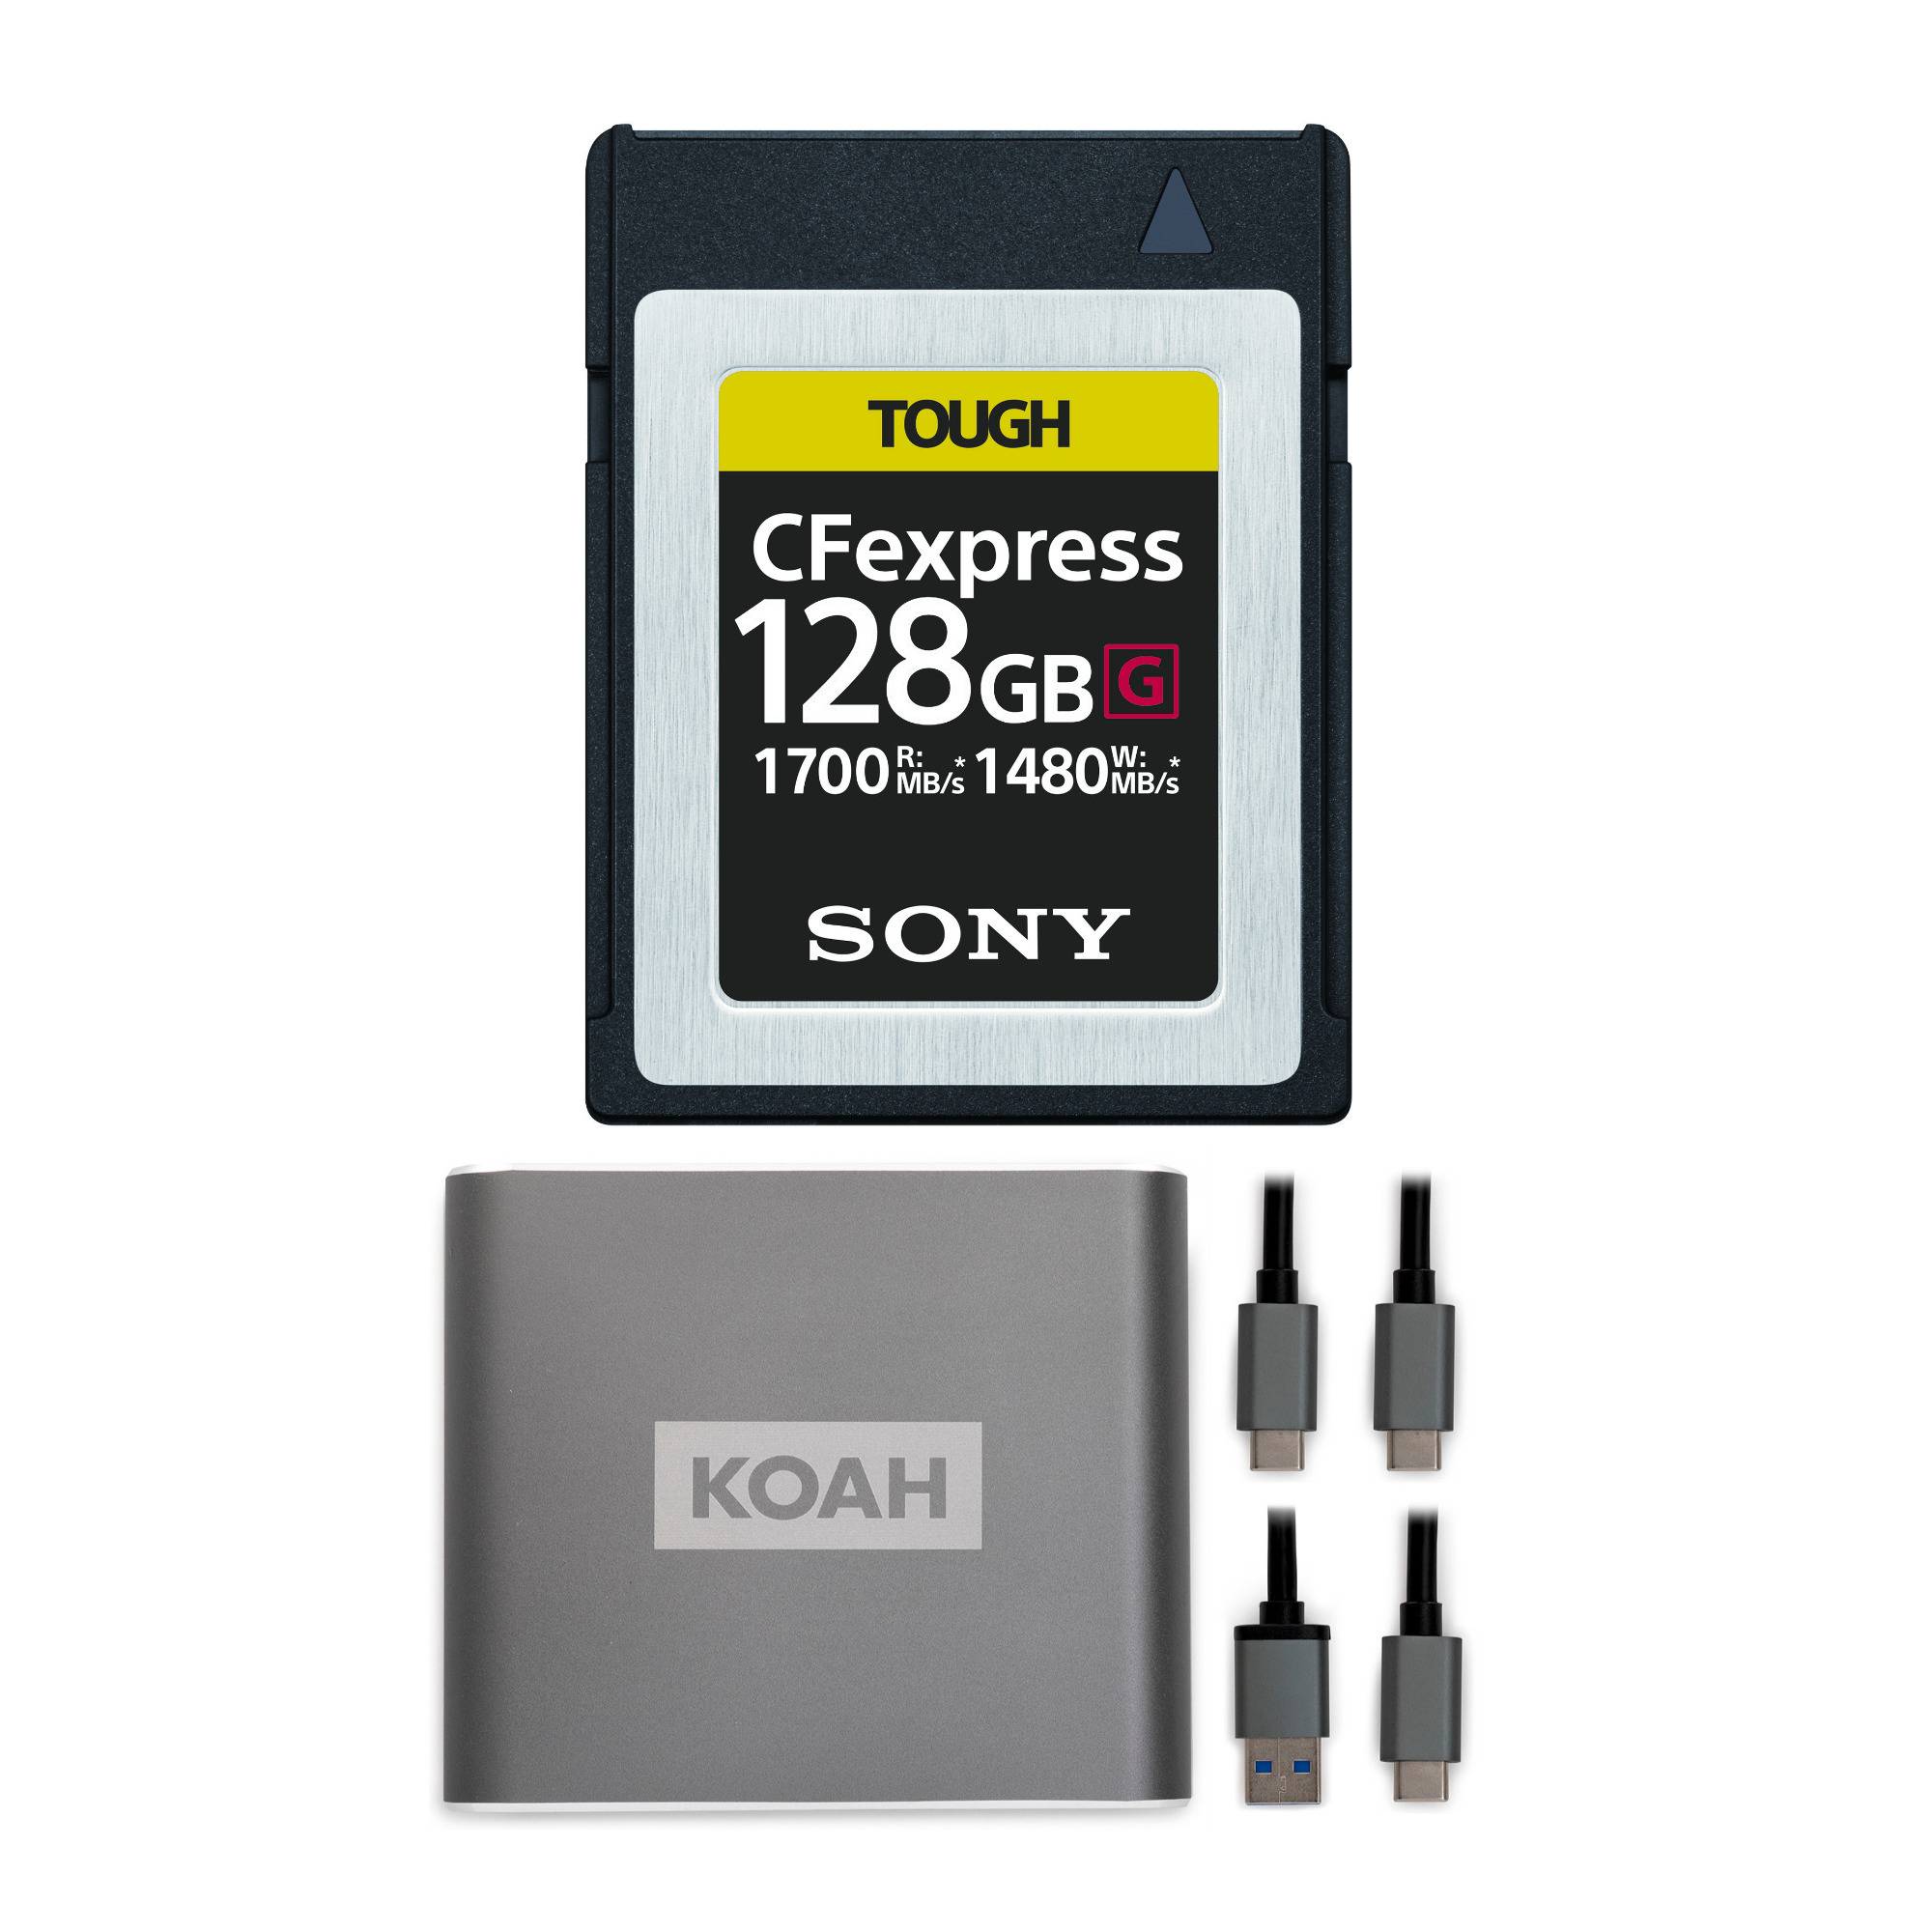 Sony 128GB TOUGH CEB-G Series CFexpress Type B Memory Card with Koah Reader Bundle